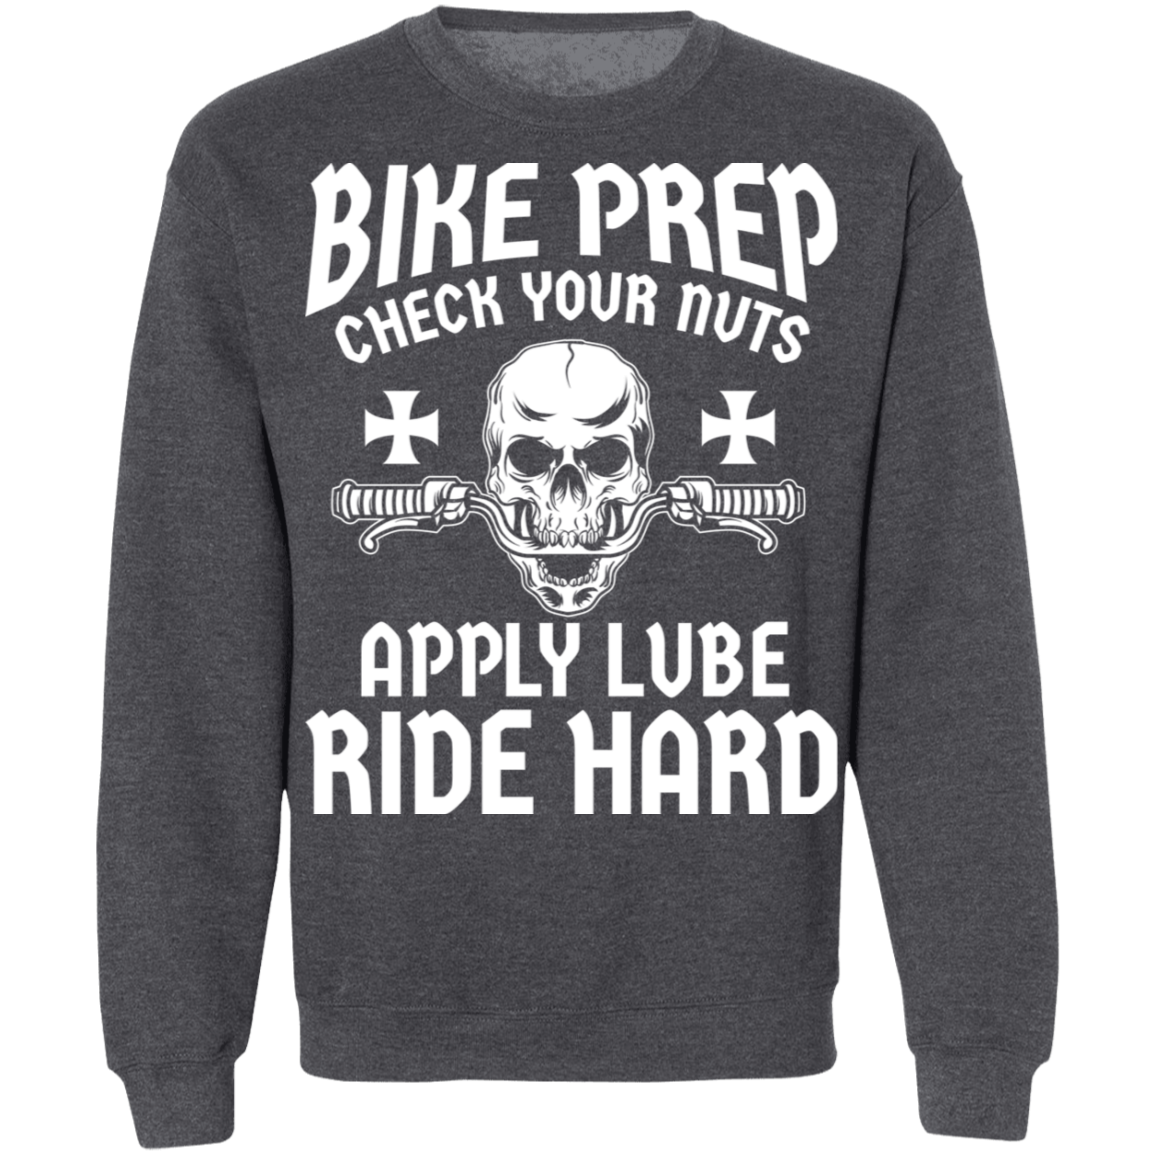 Bike Prep Shirt